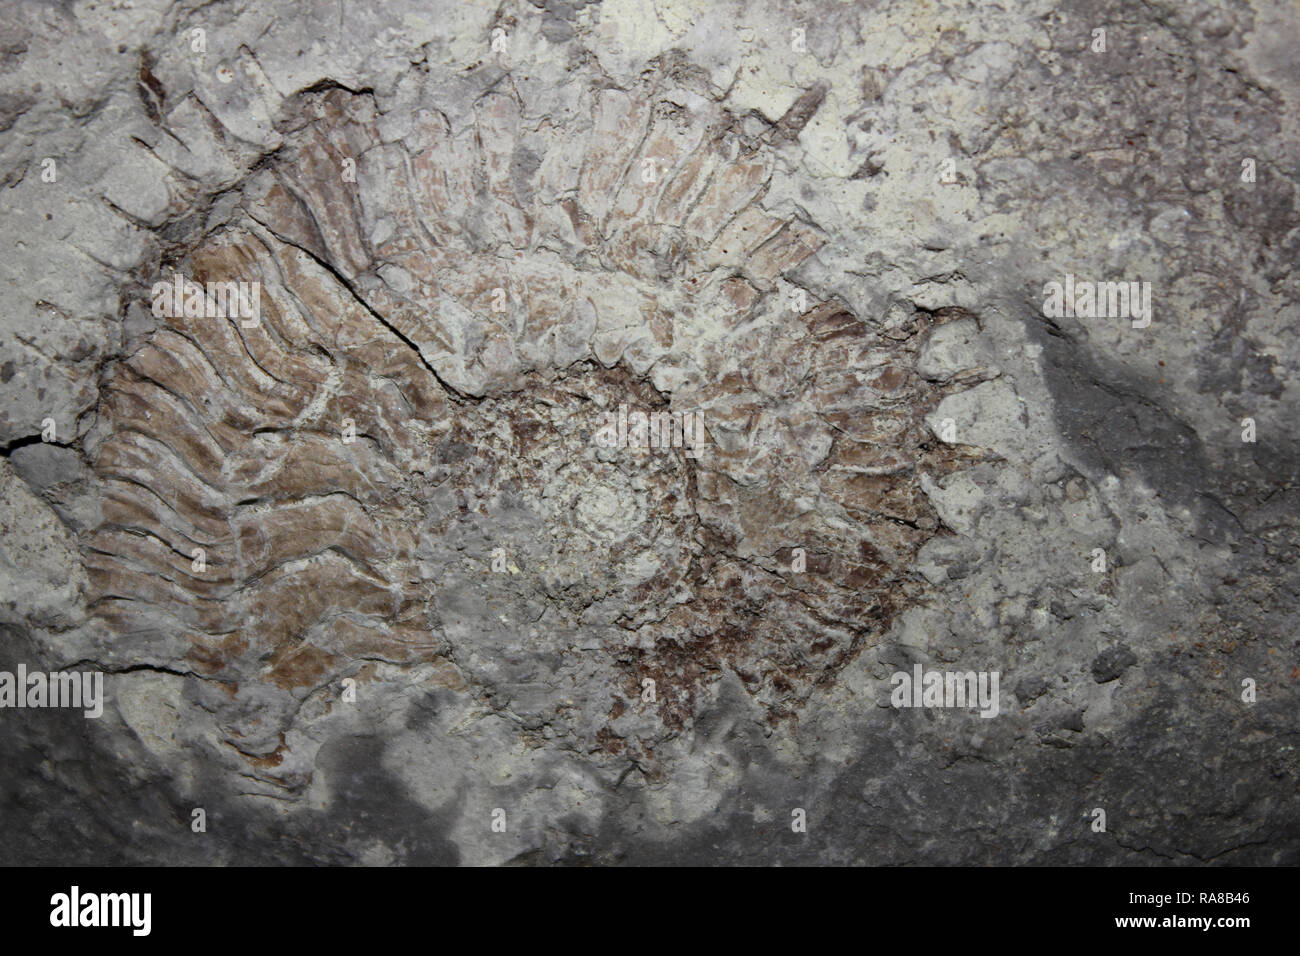 Jurassic Coast Fossil Ammonite Pectinatites cornutifer Stock Photo